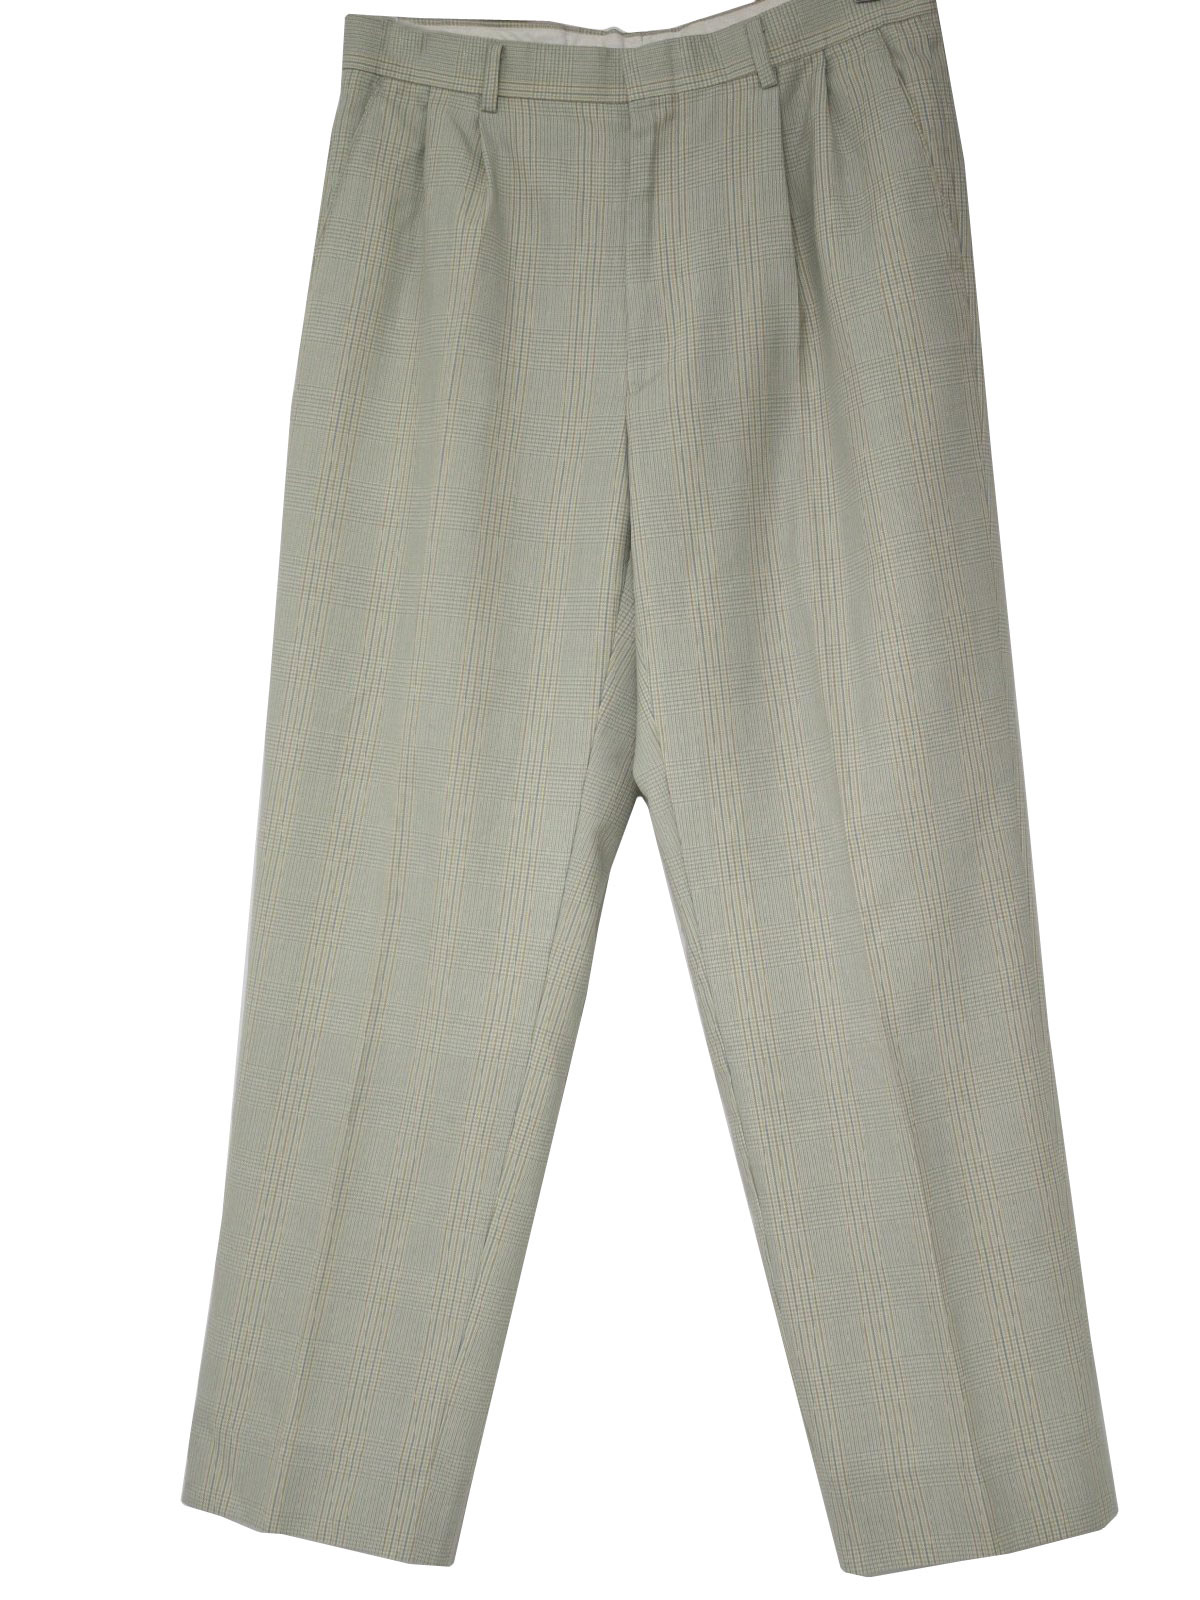 1980s Vintage Pants: 80s -Pregio- Mens tan, olivine, and pastel blue ...